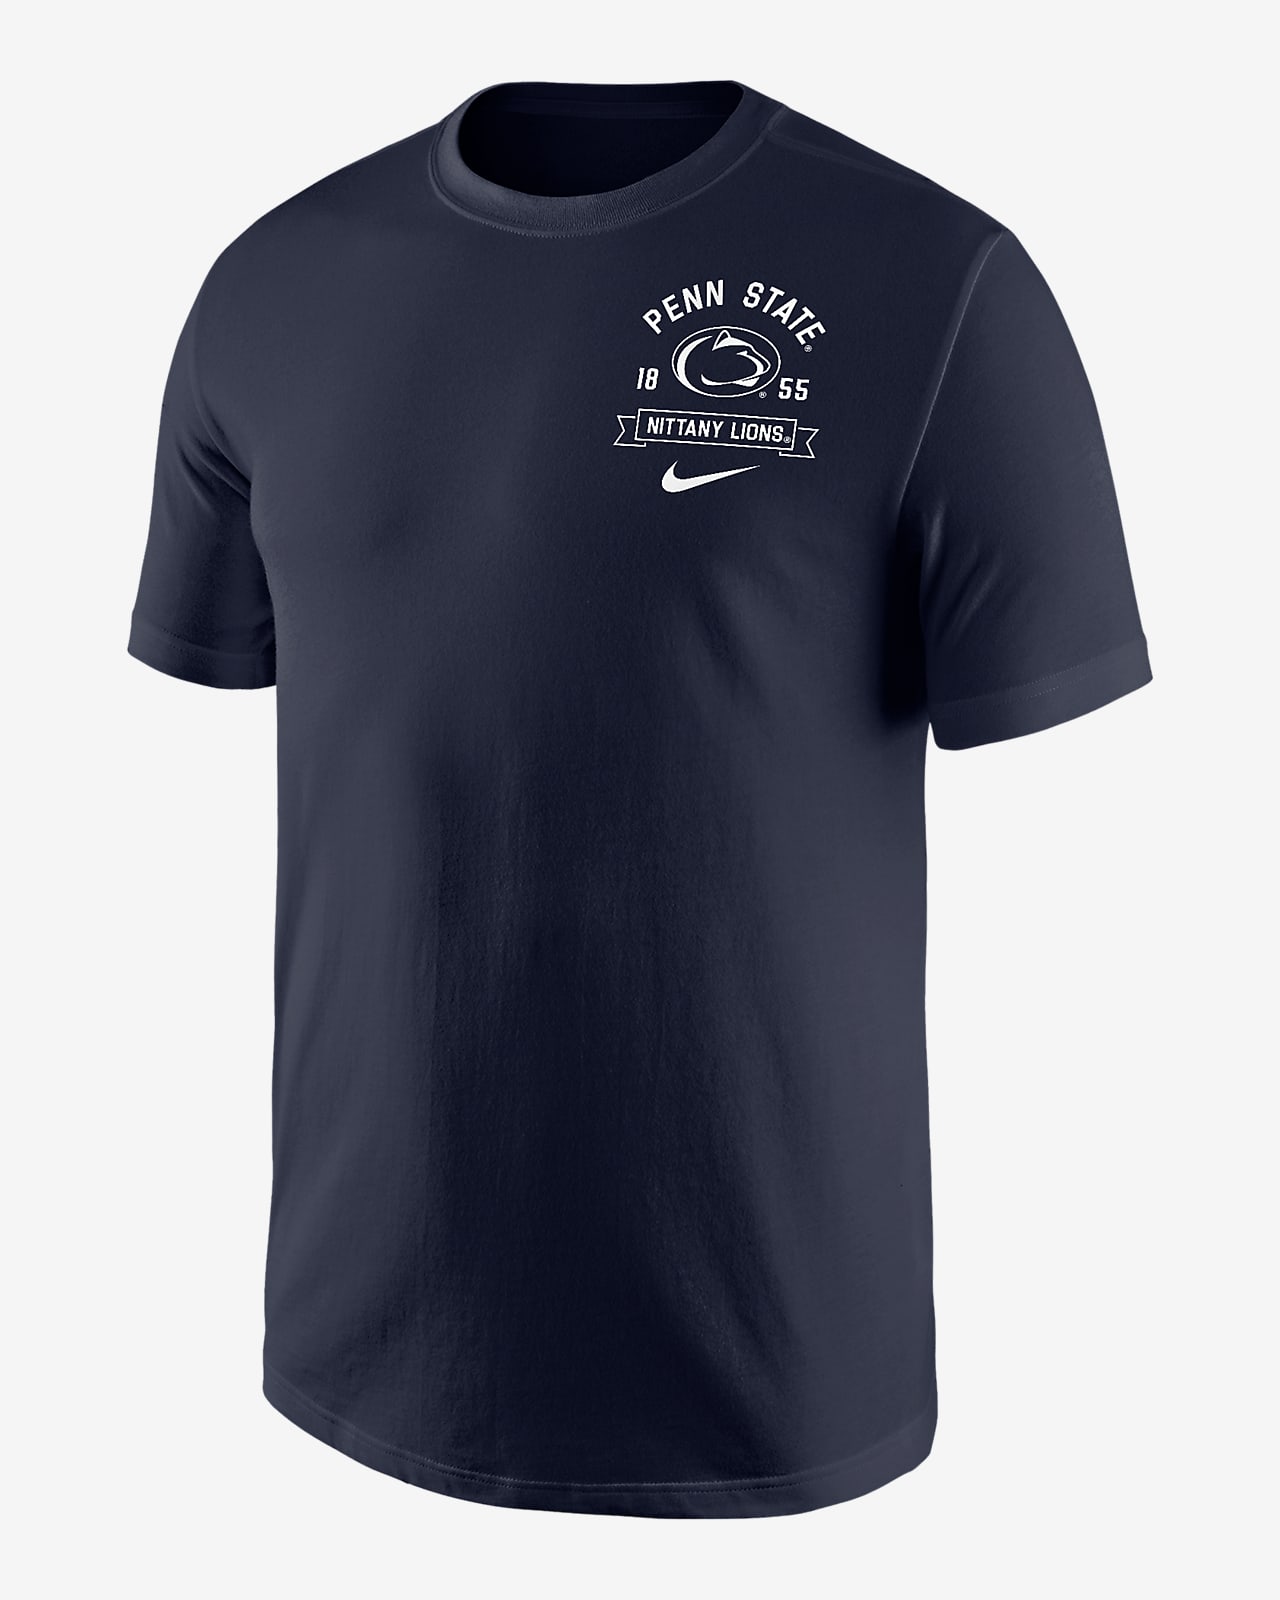 Penn State Men's Nike College Max90 T-Shirt